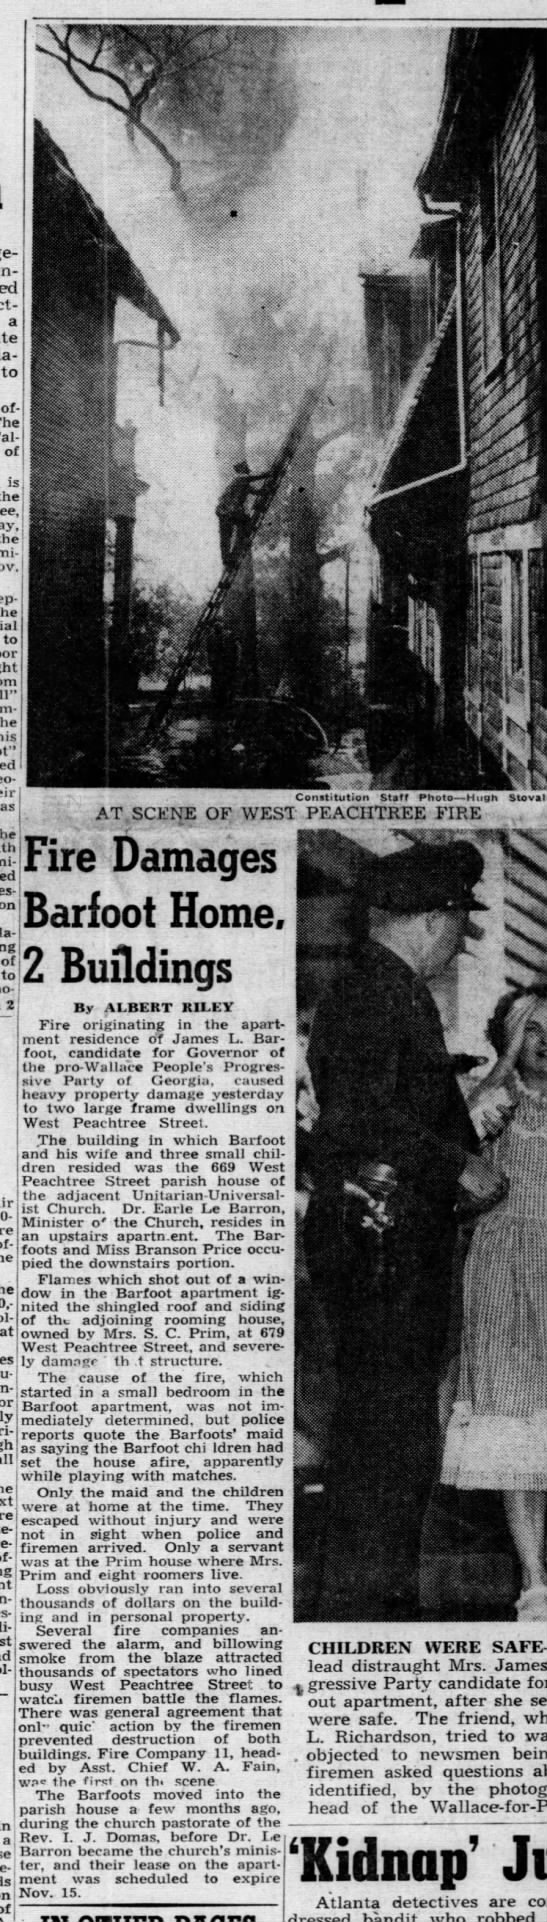 19480925 Article Fire Destroys Part of UU Church Parsonage Domas LeBaron Minister - 